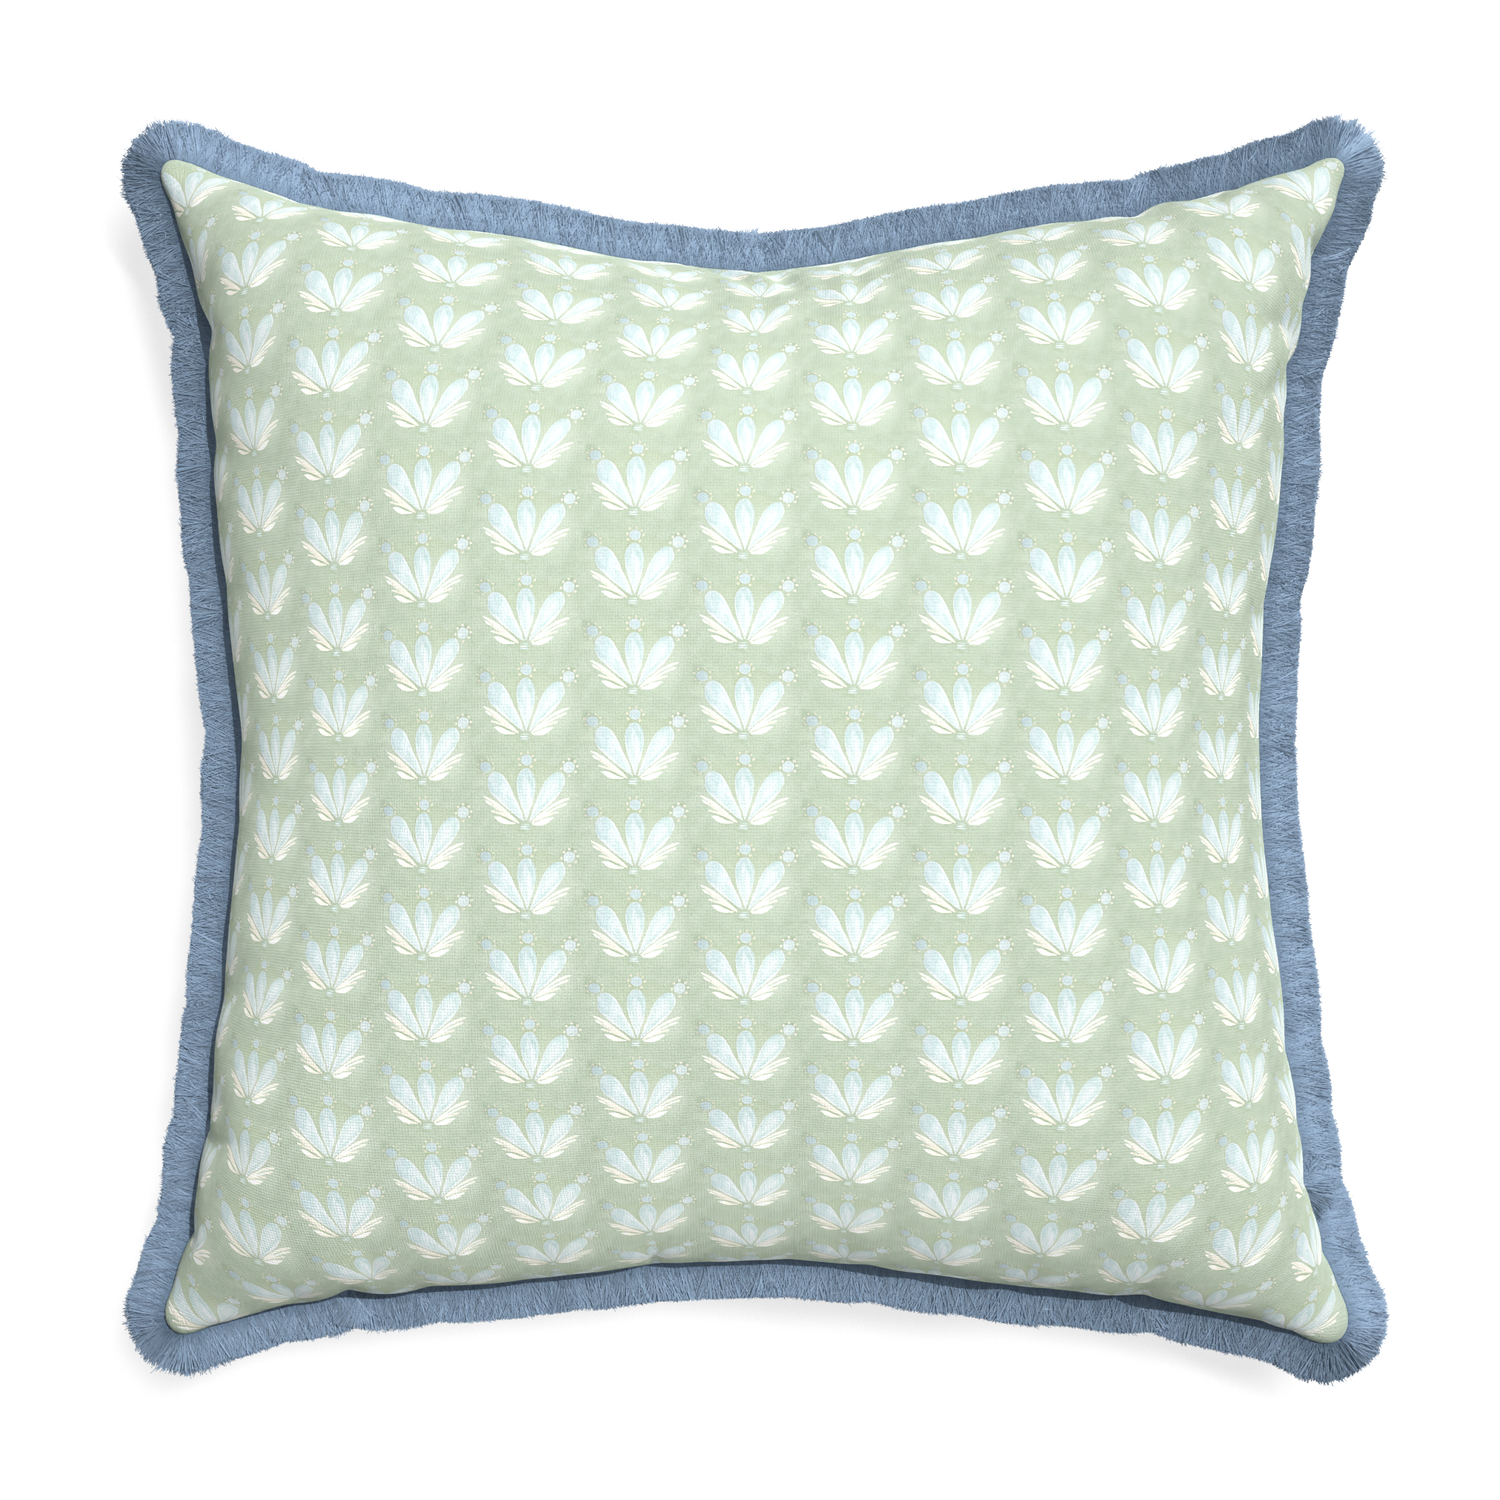 Euro-sham serena sea salt custom pillow with sky fringe on white background